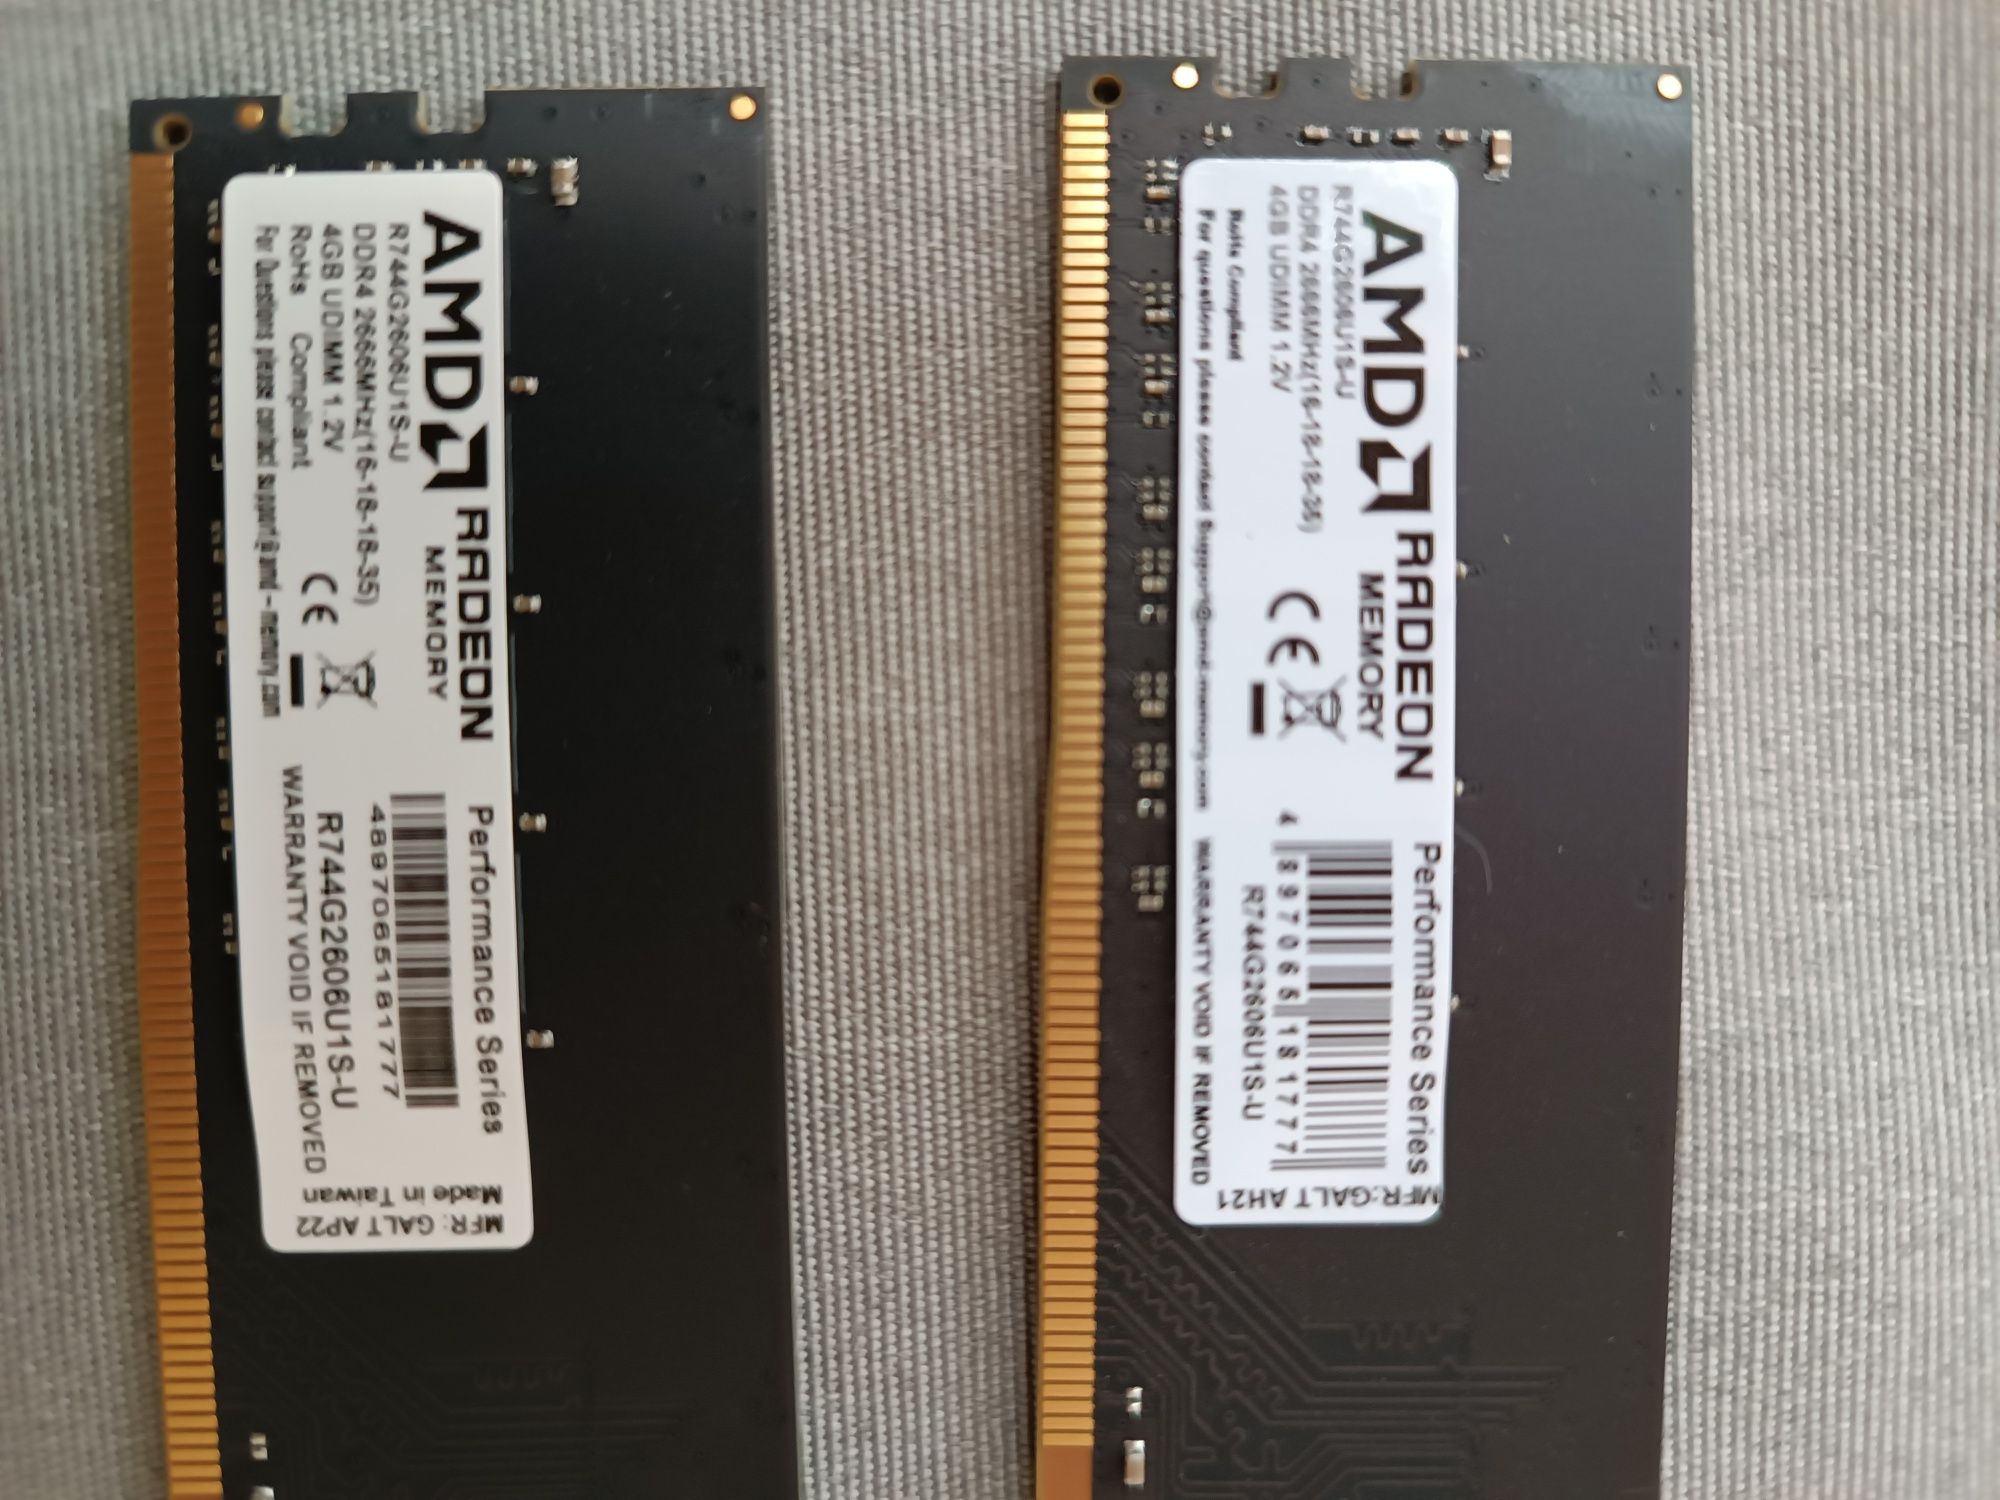 Kuchli Aperatifka Amd Radeon DDR 4 ga 4 dan 2 ta 8 gb orginal